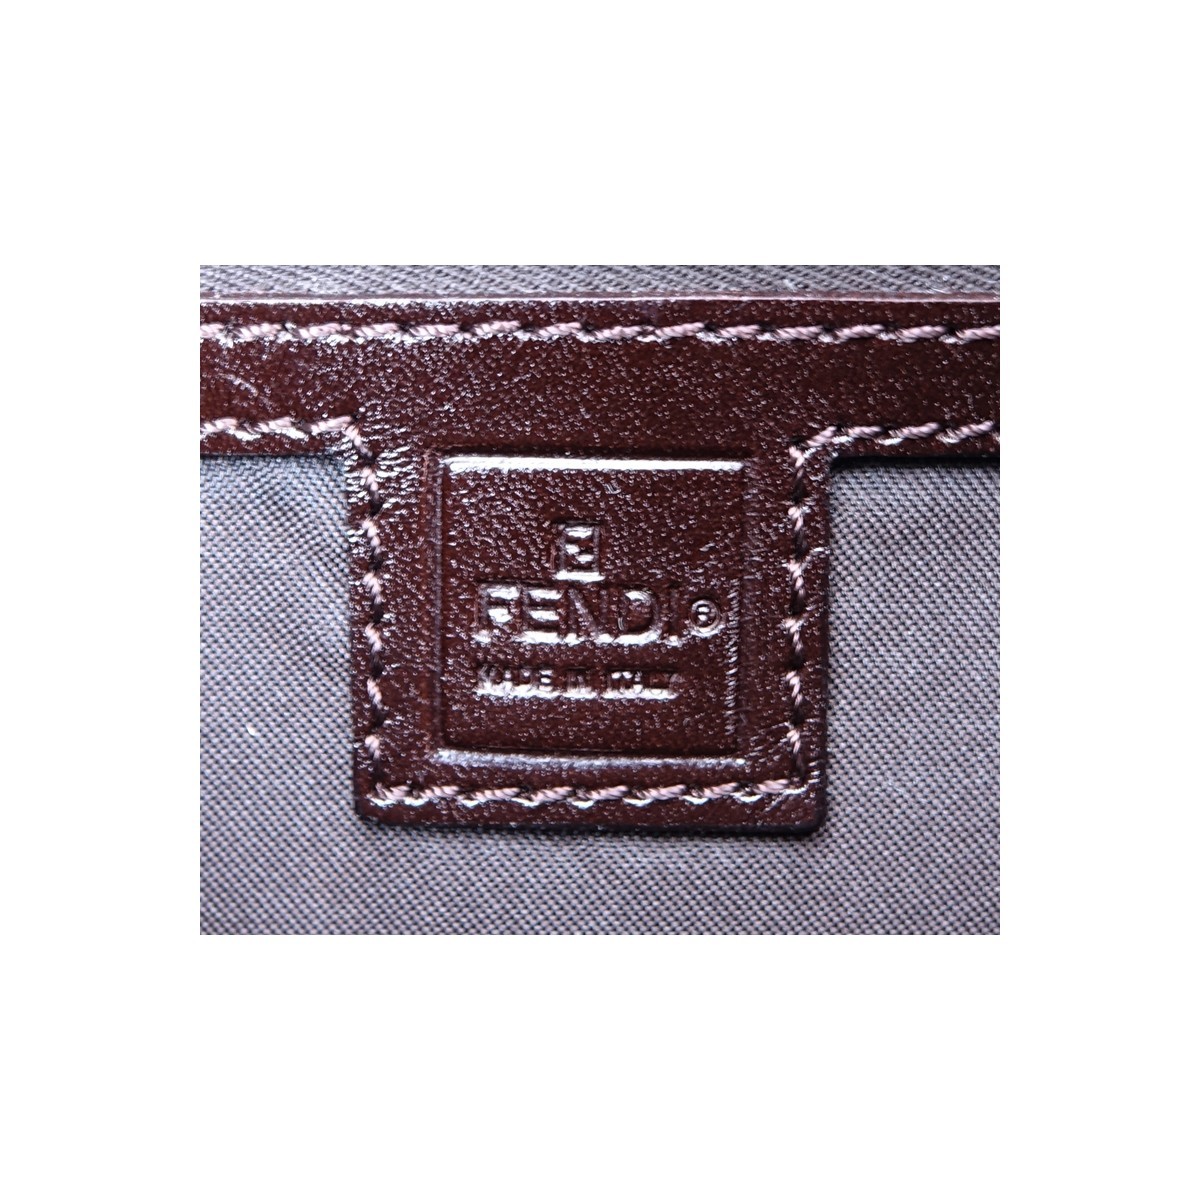 Fendi Brown Monogram Canvas Baguette Handbag. Silvertone hardware, interior of dark brown canvas with zippered pocket.